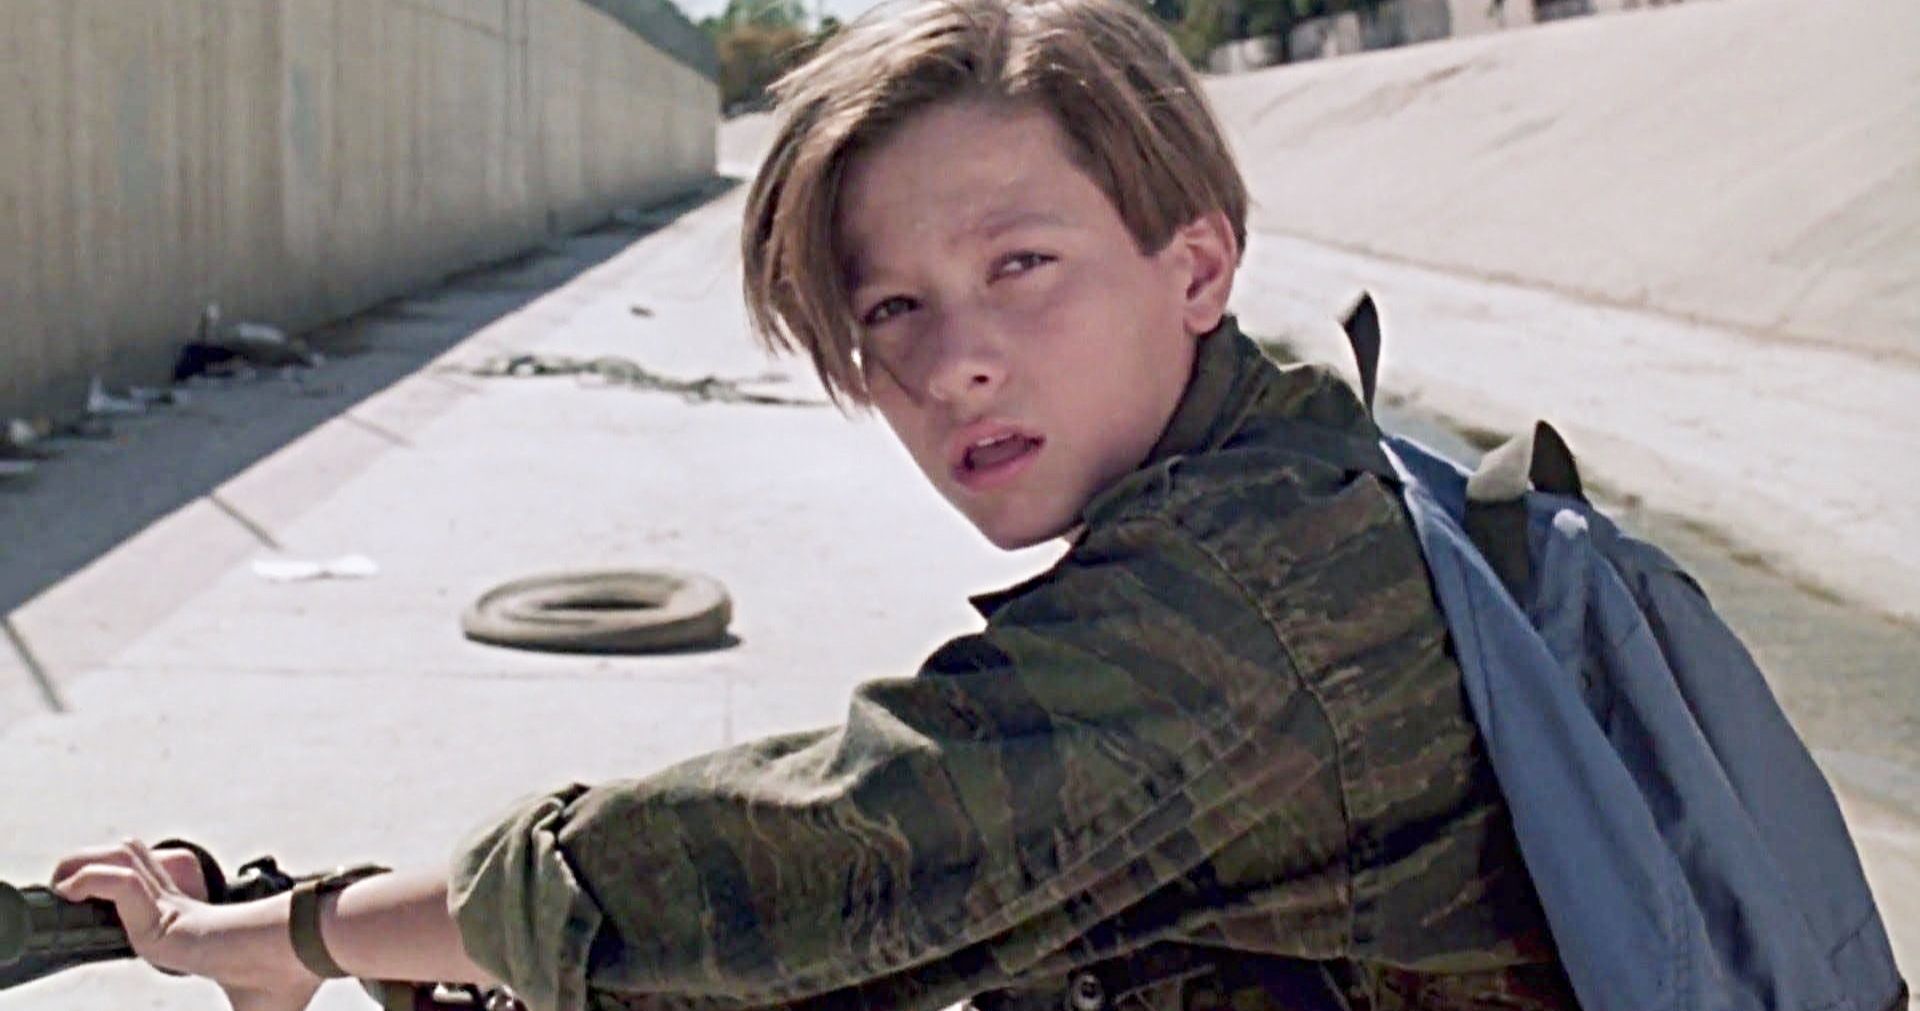 Edward Furlong Will Return as John Connor in Terminator: Dark Fate